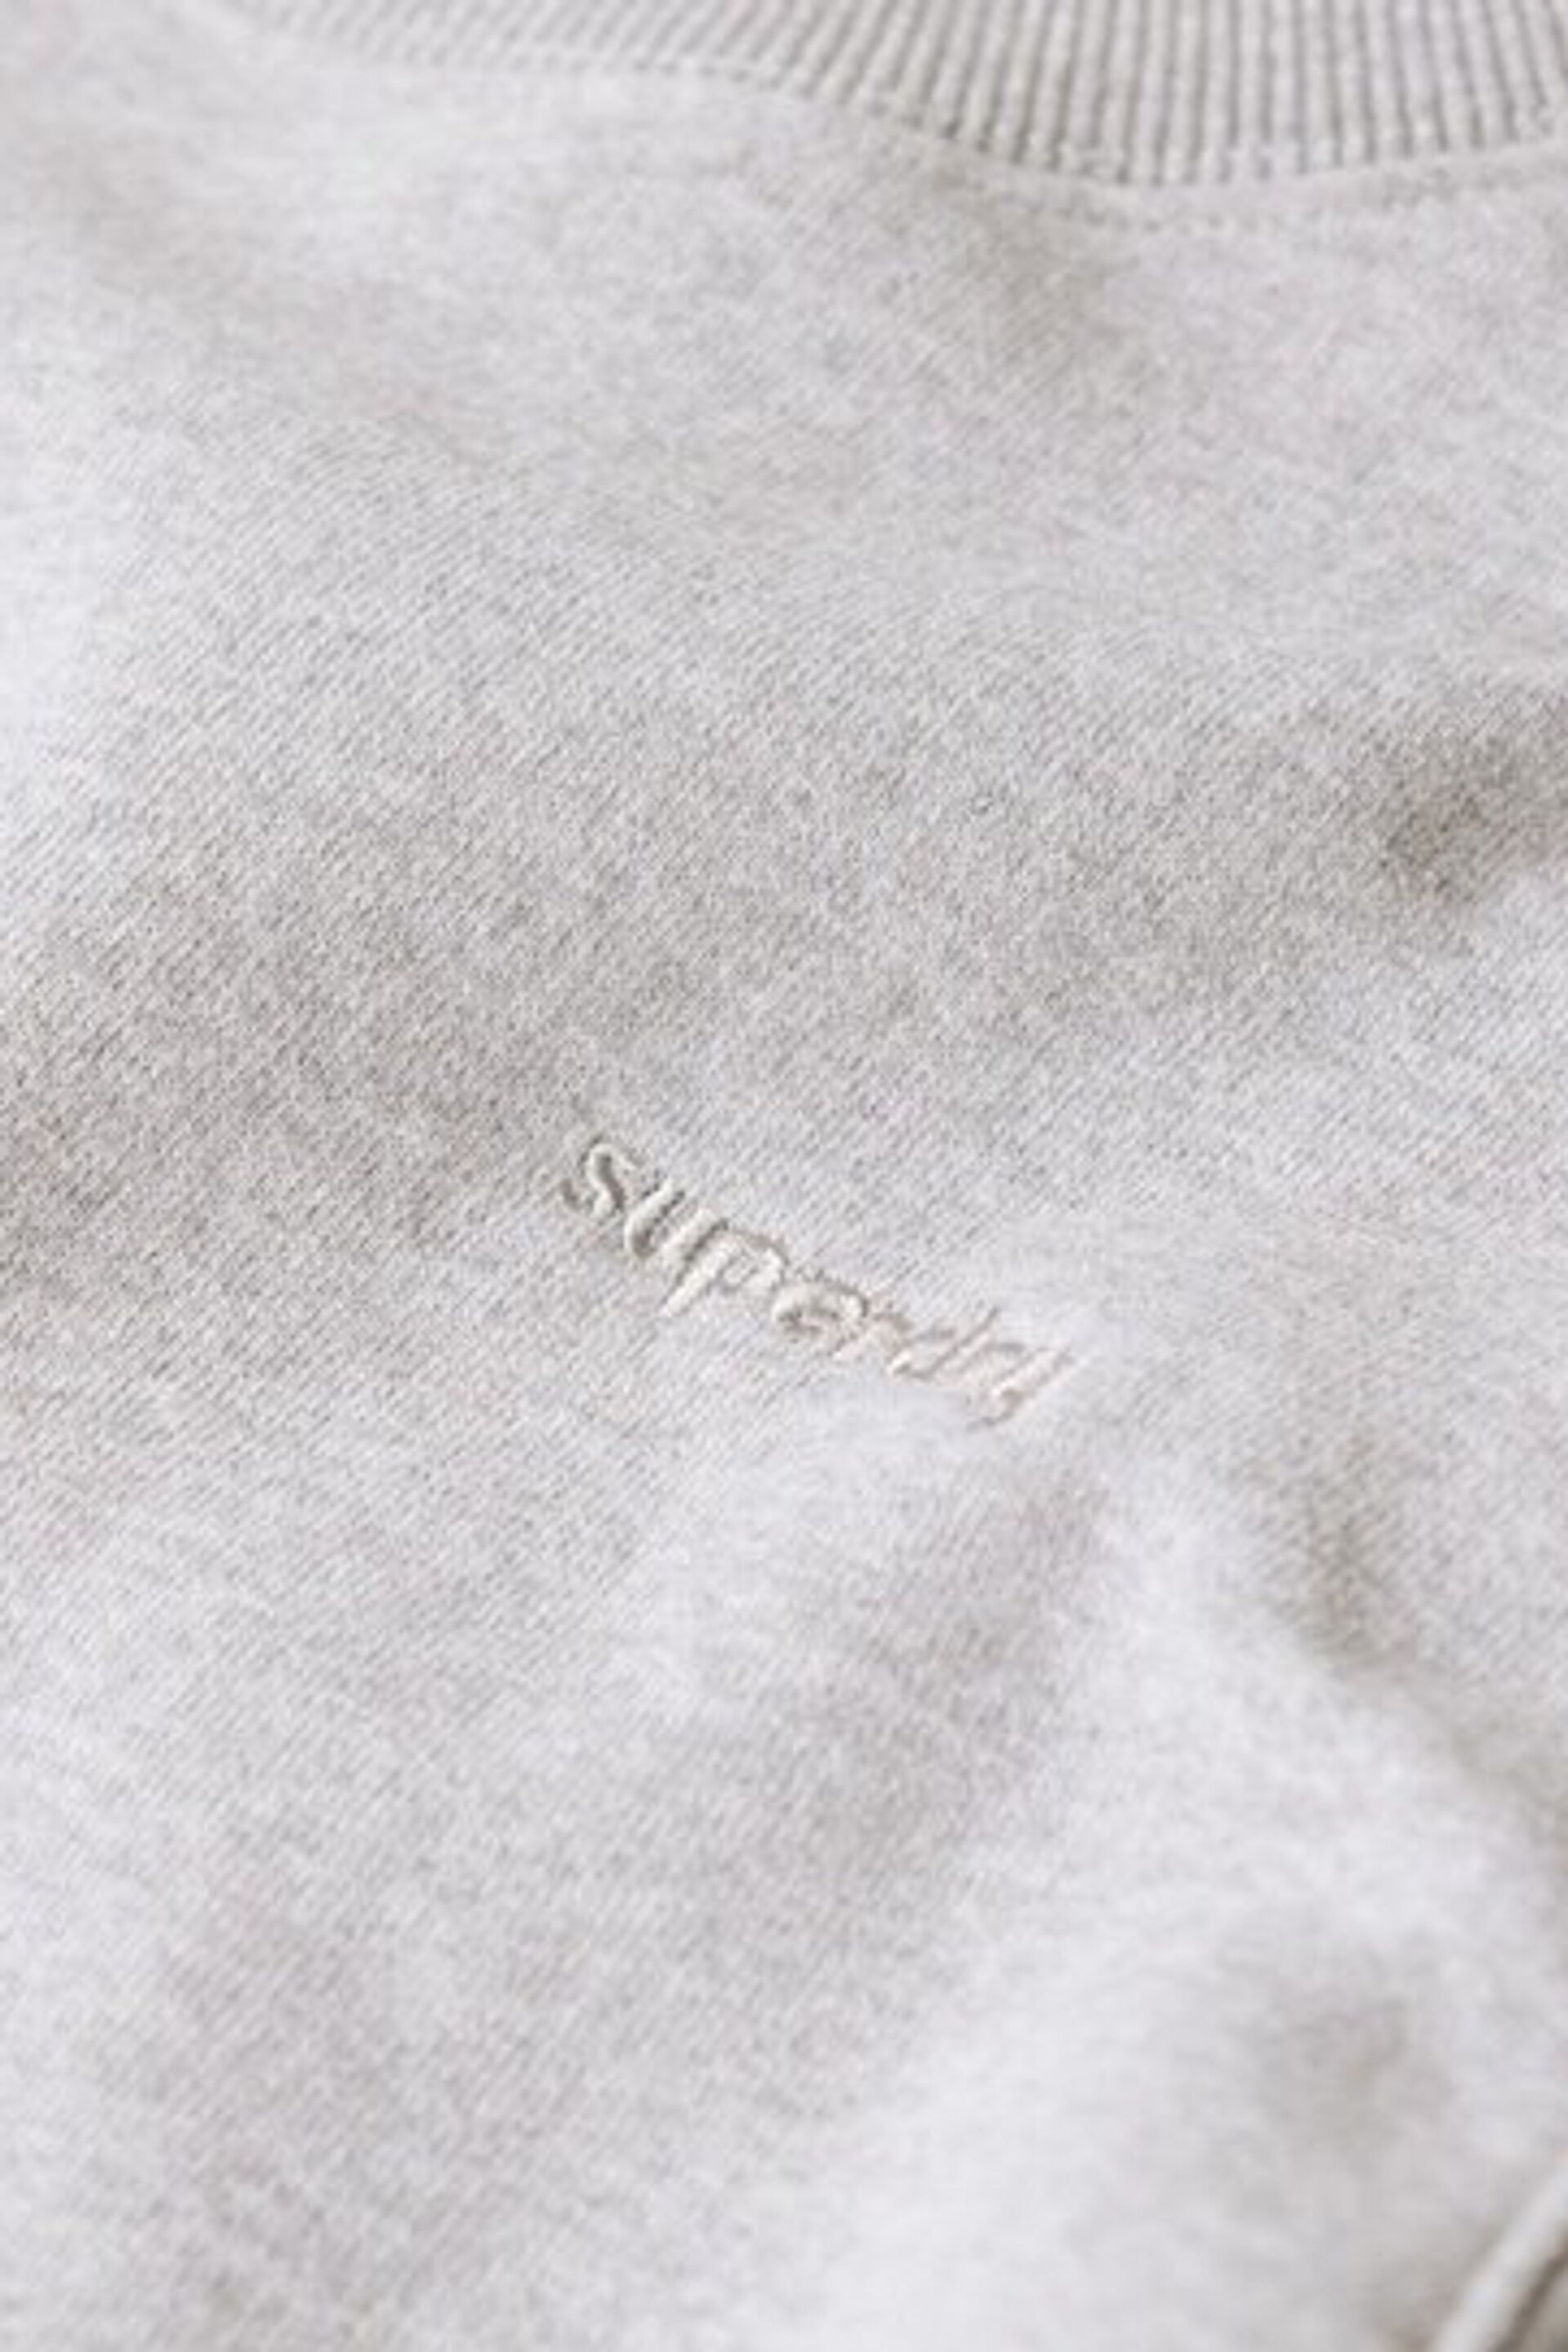 Superdry Grey Vintage Washed Sweatshirt - Image 6 of 6